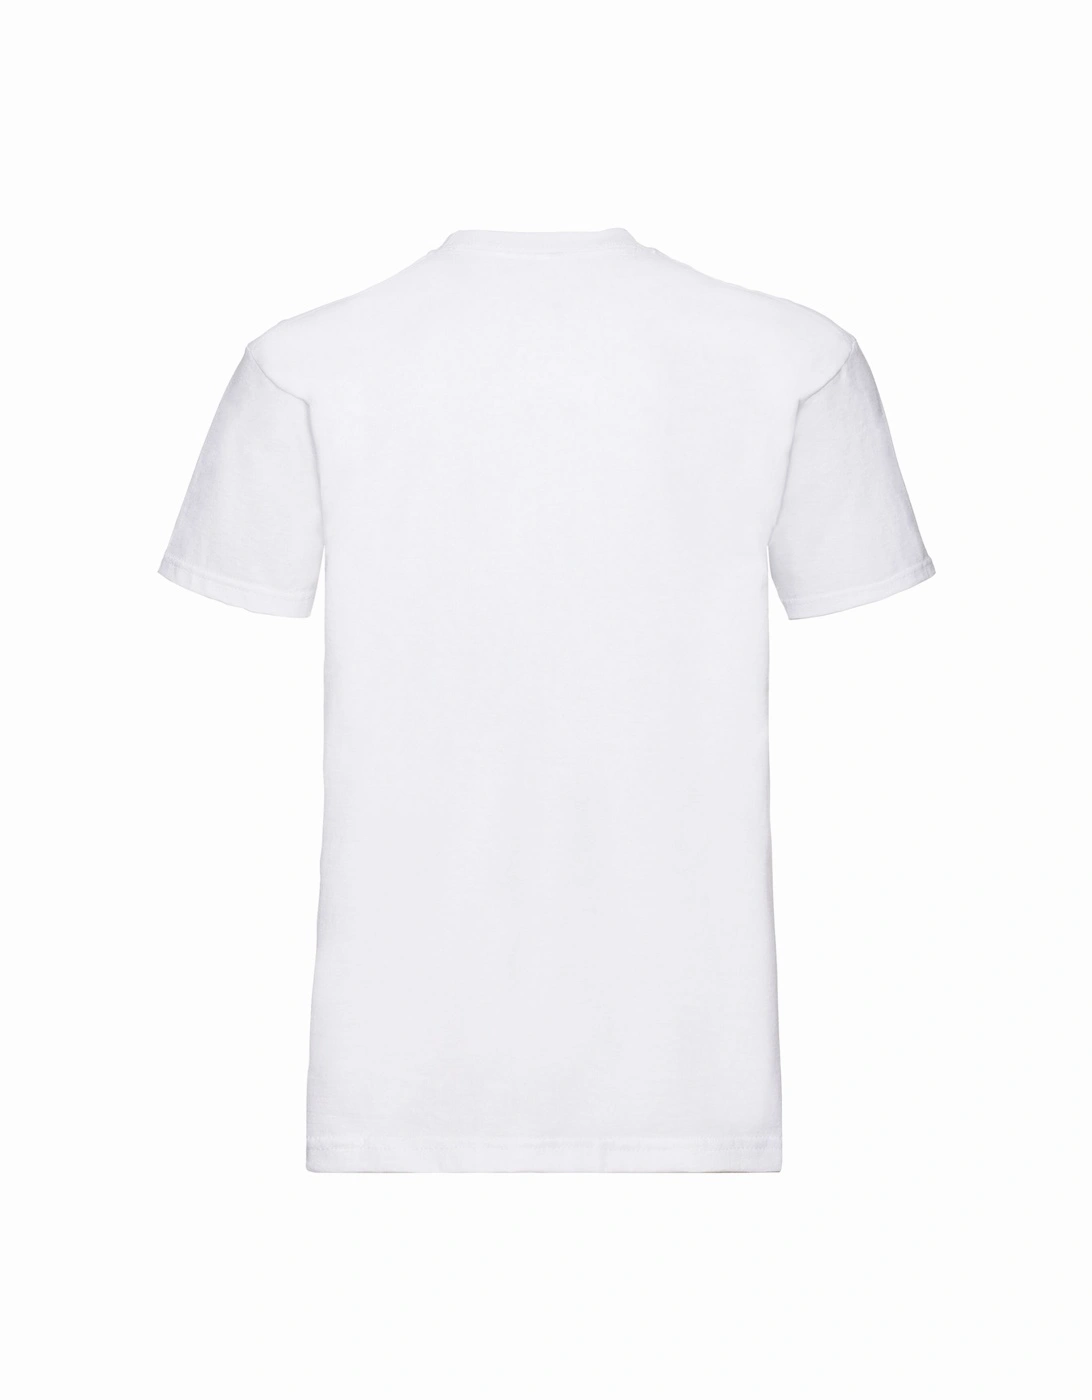 Mens Super Premium Plain T-Shirt